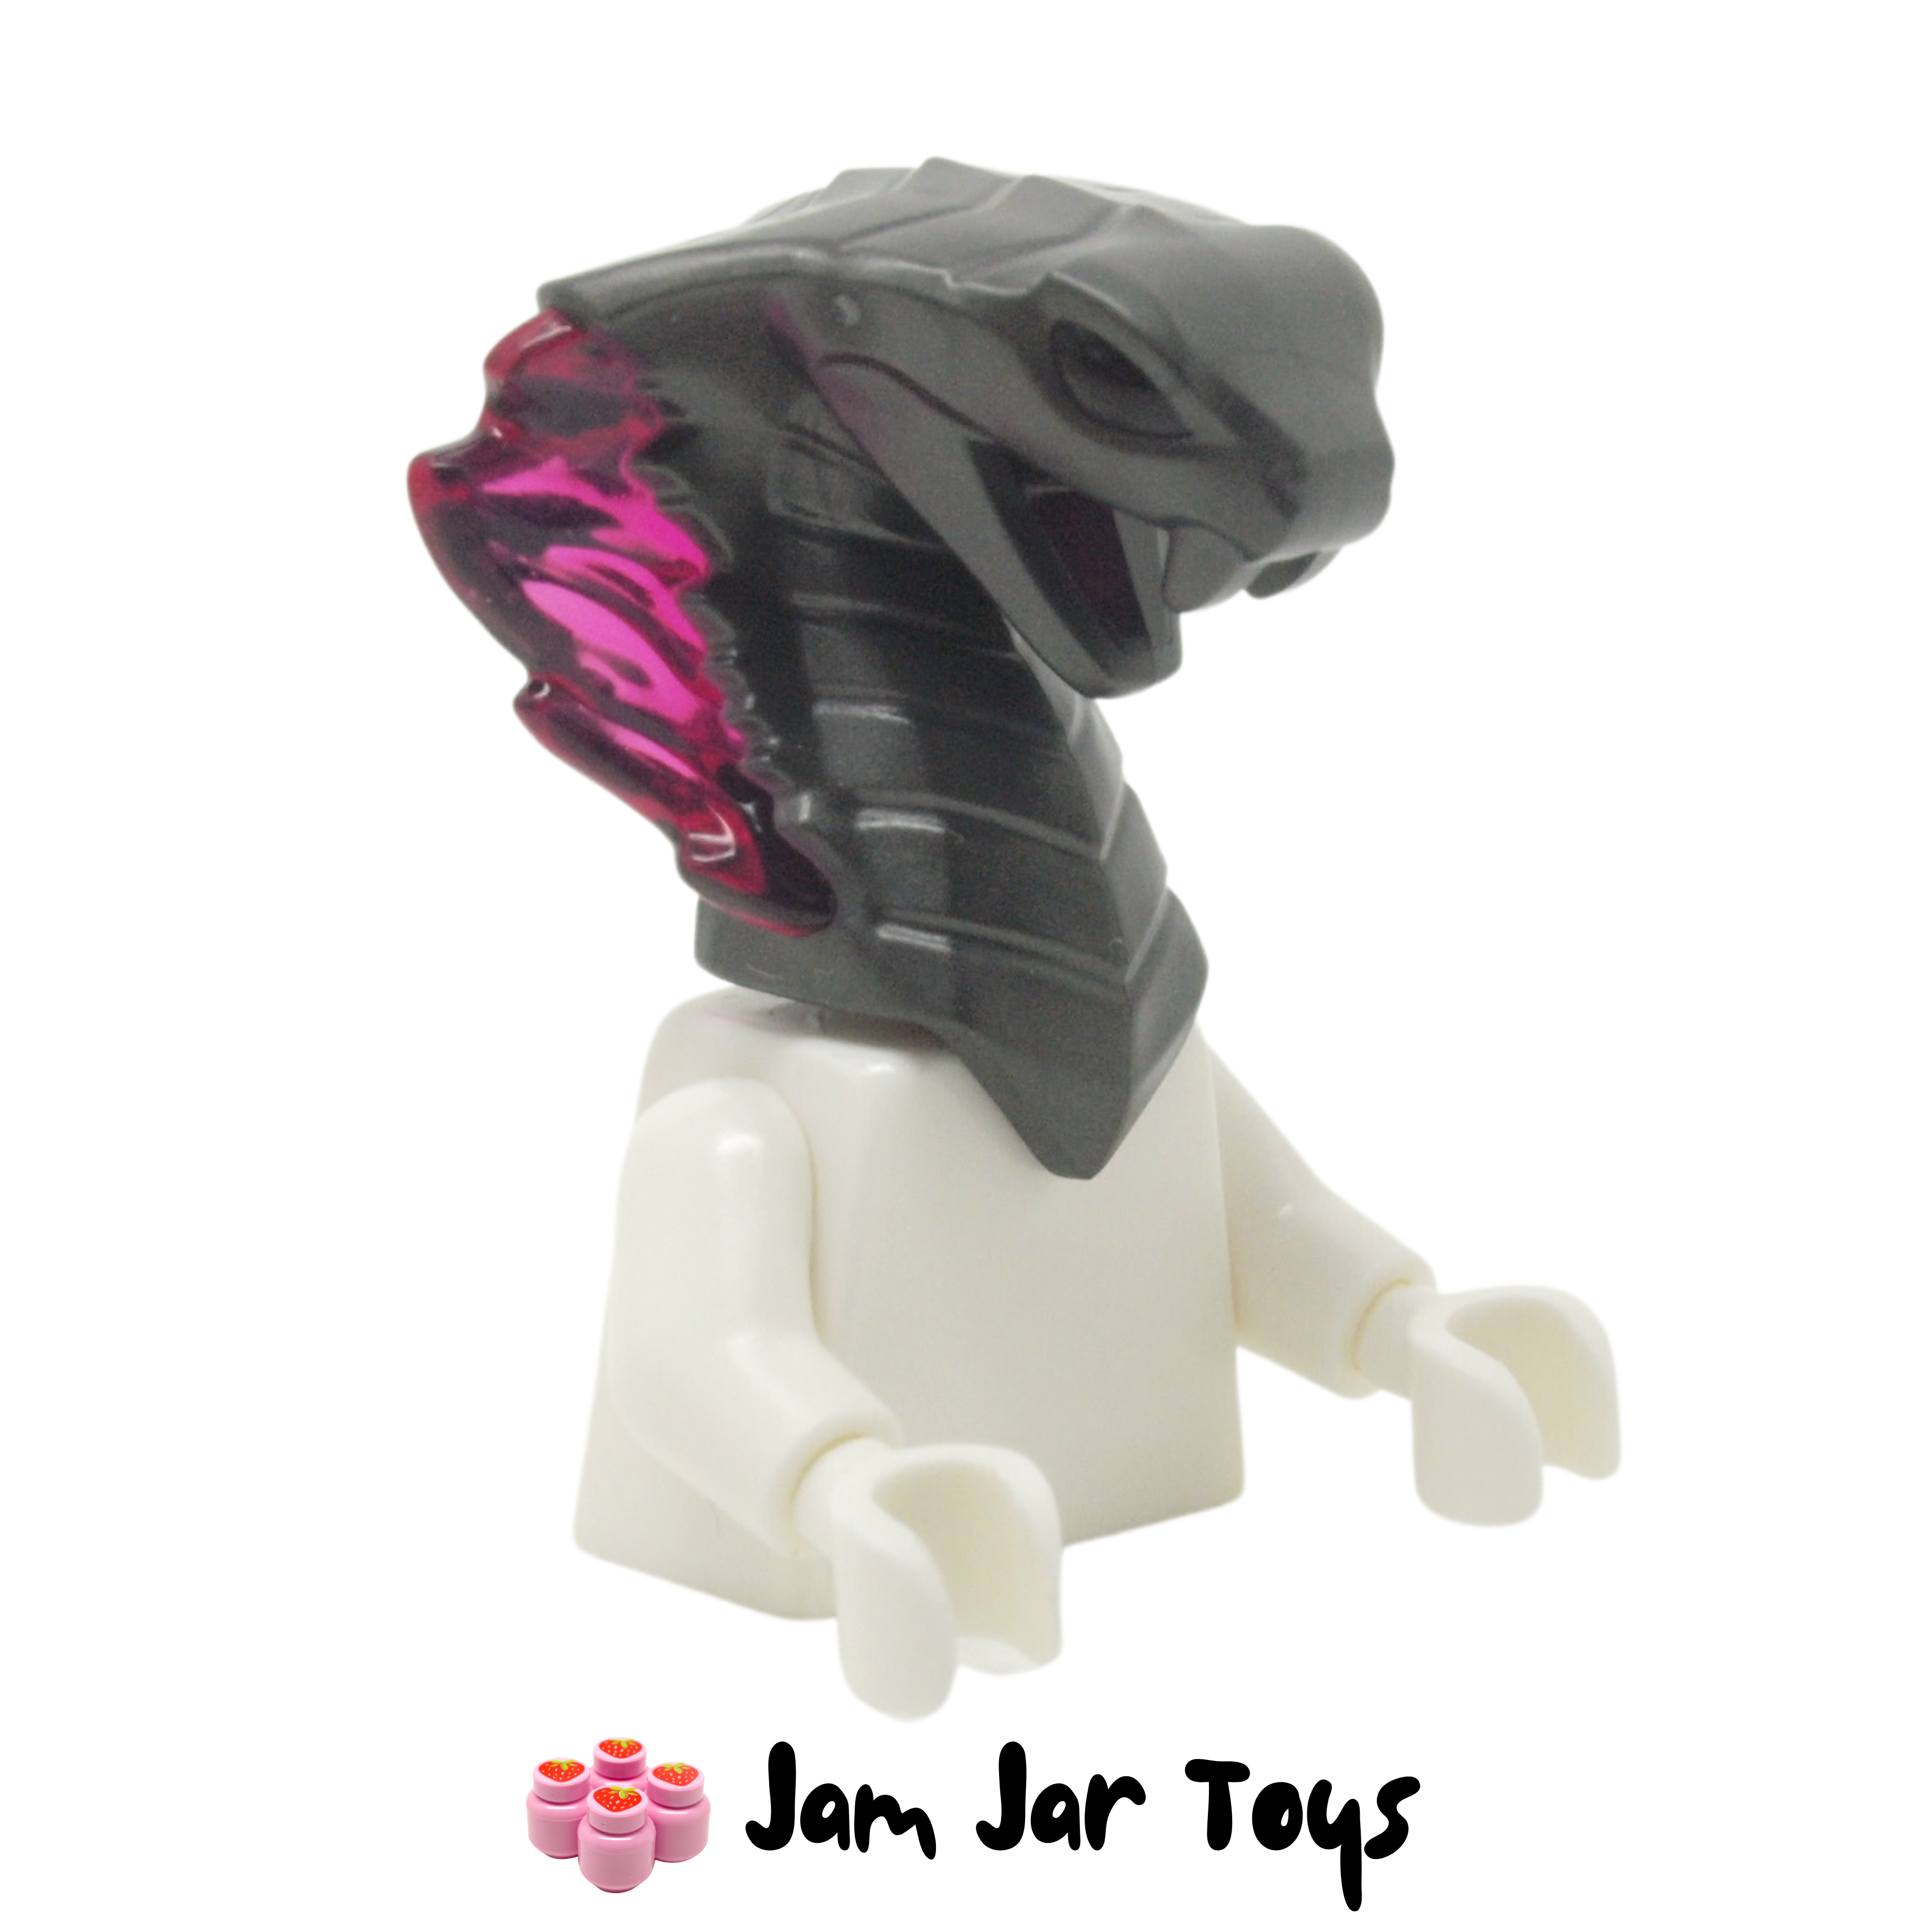 Lego Accessoires Minifig Fleurs (Bright Pink)